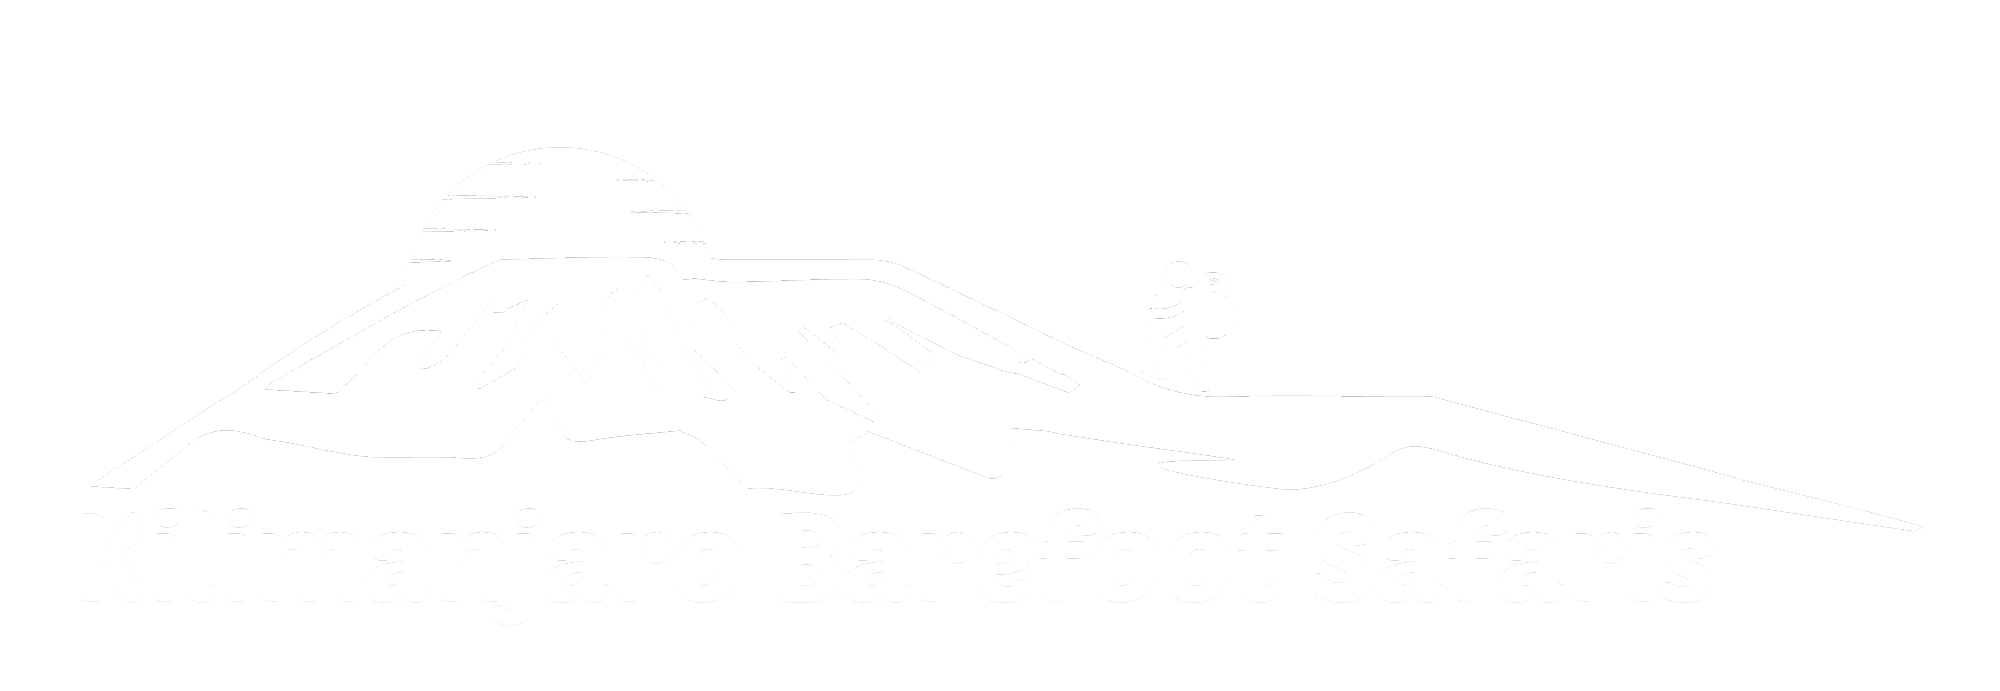 Kilimanjaro Barefoot